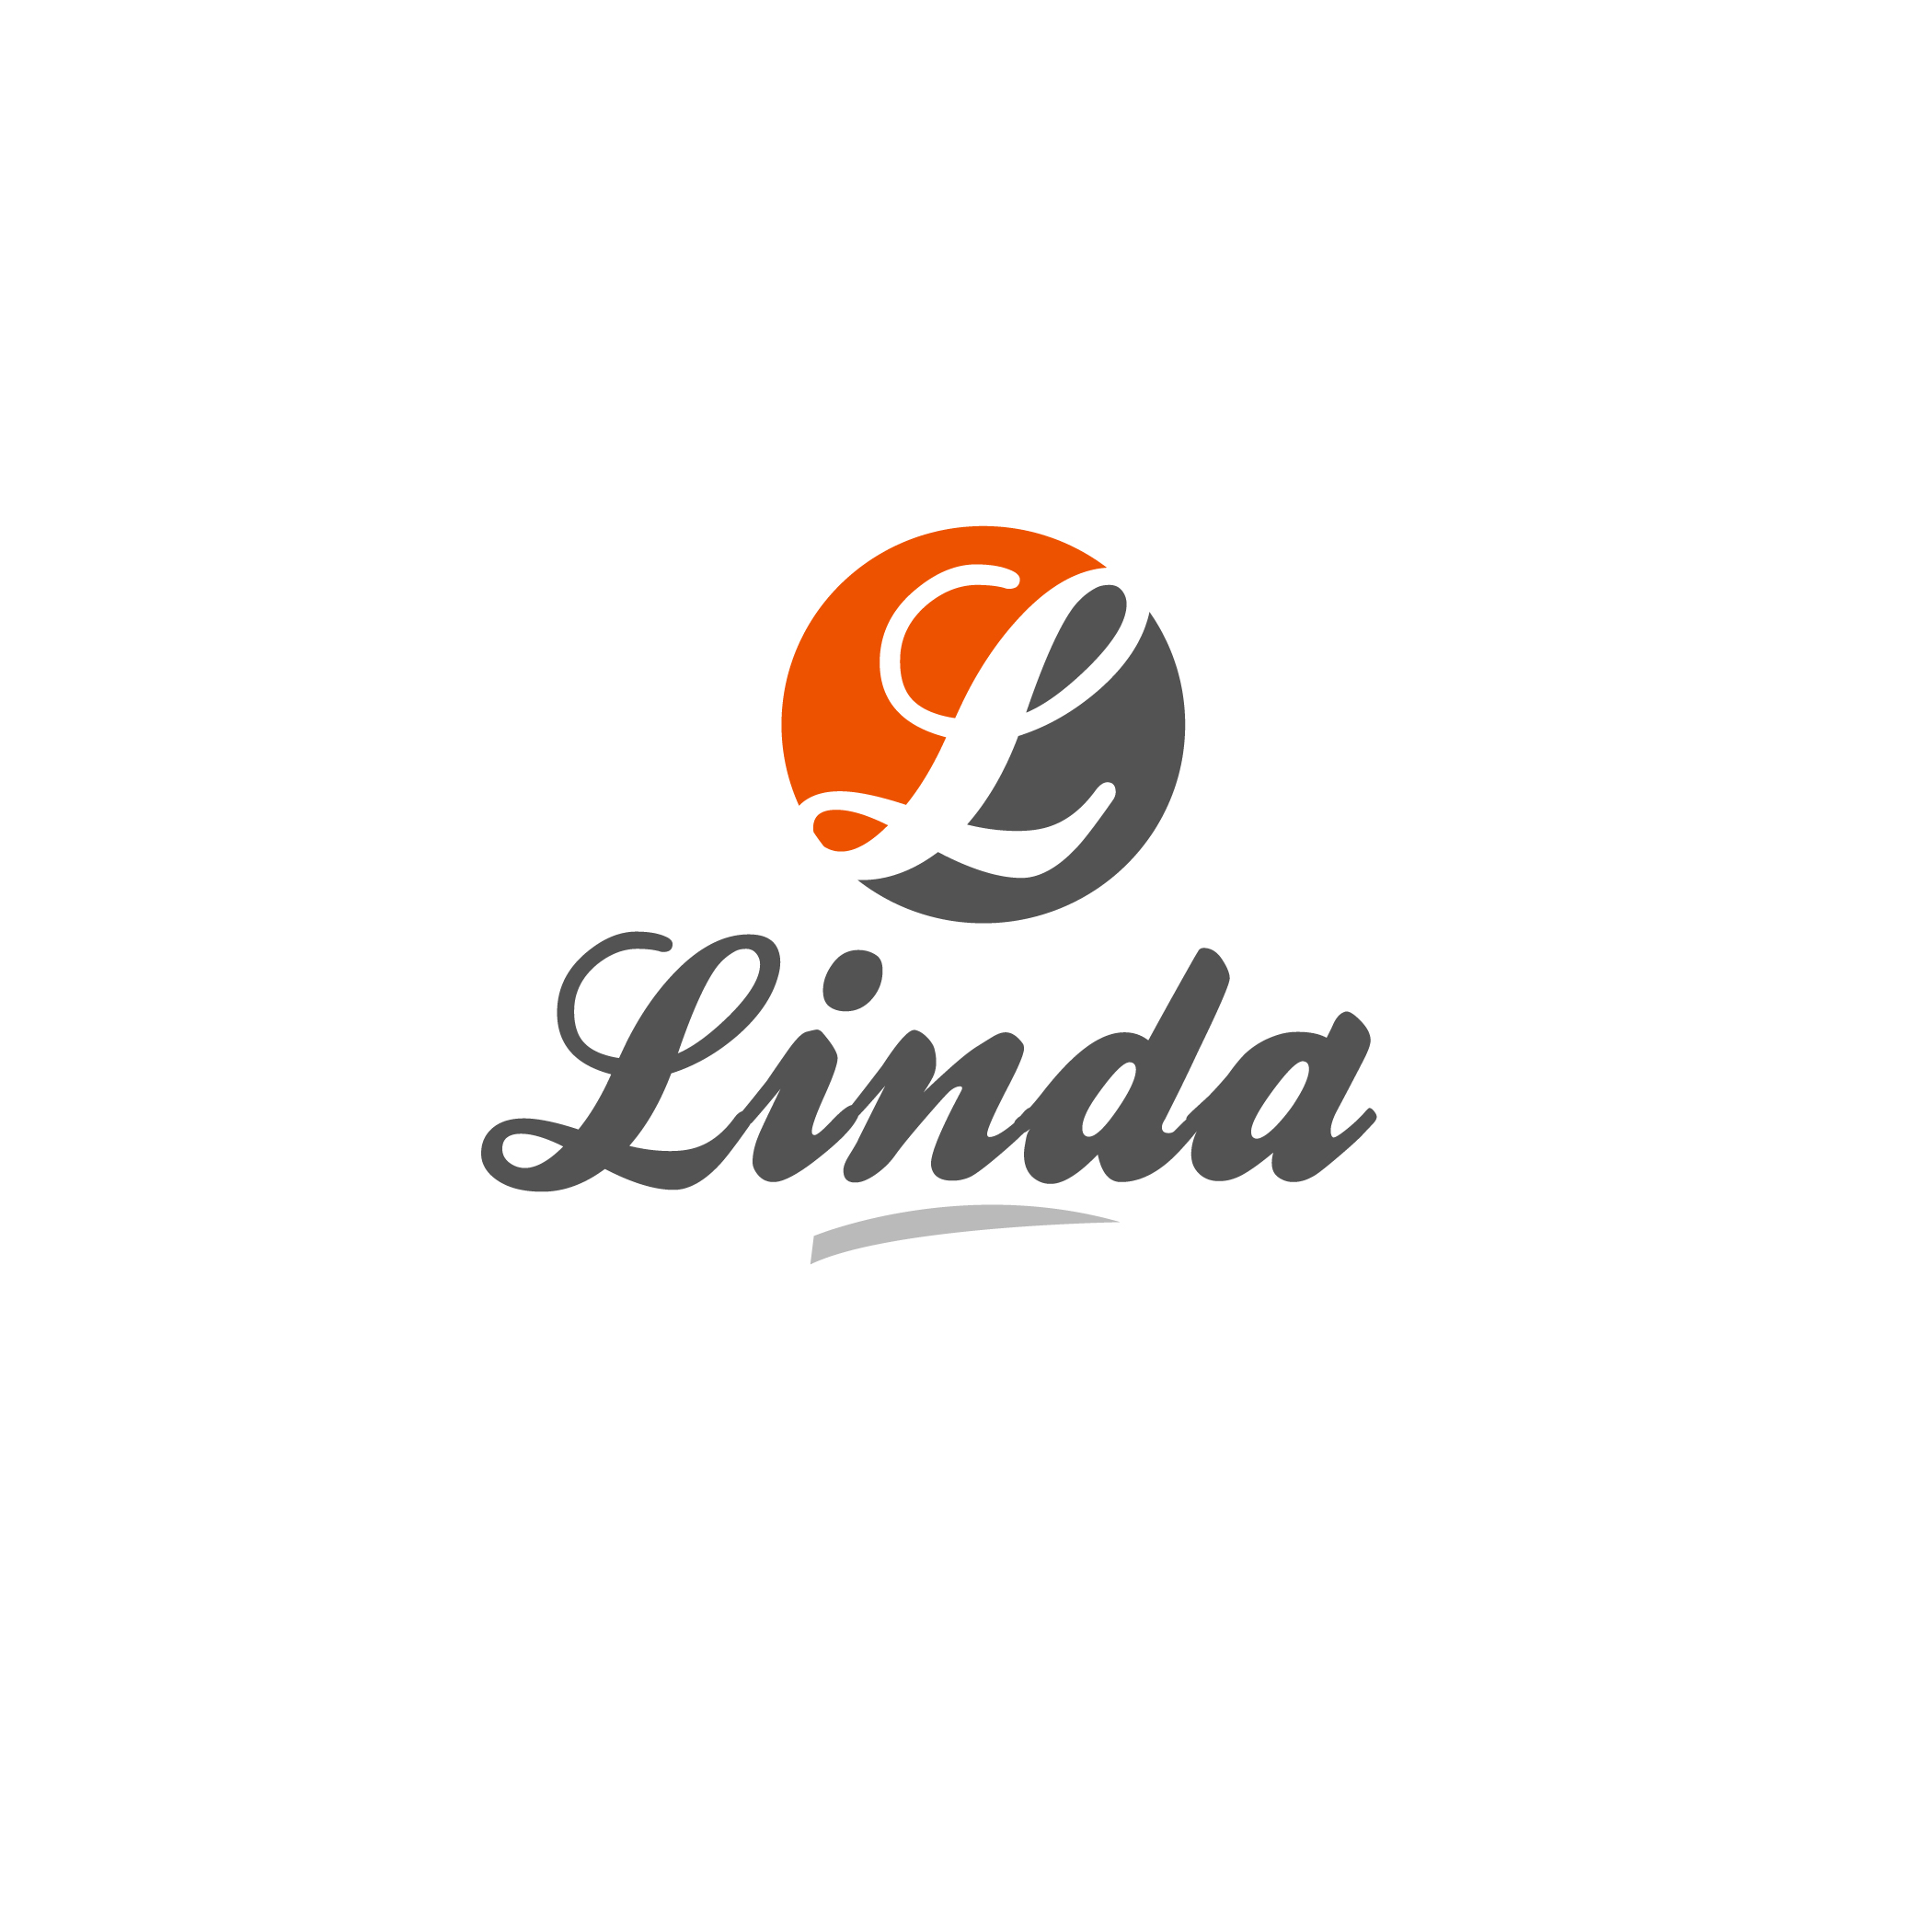 Linda Project.